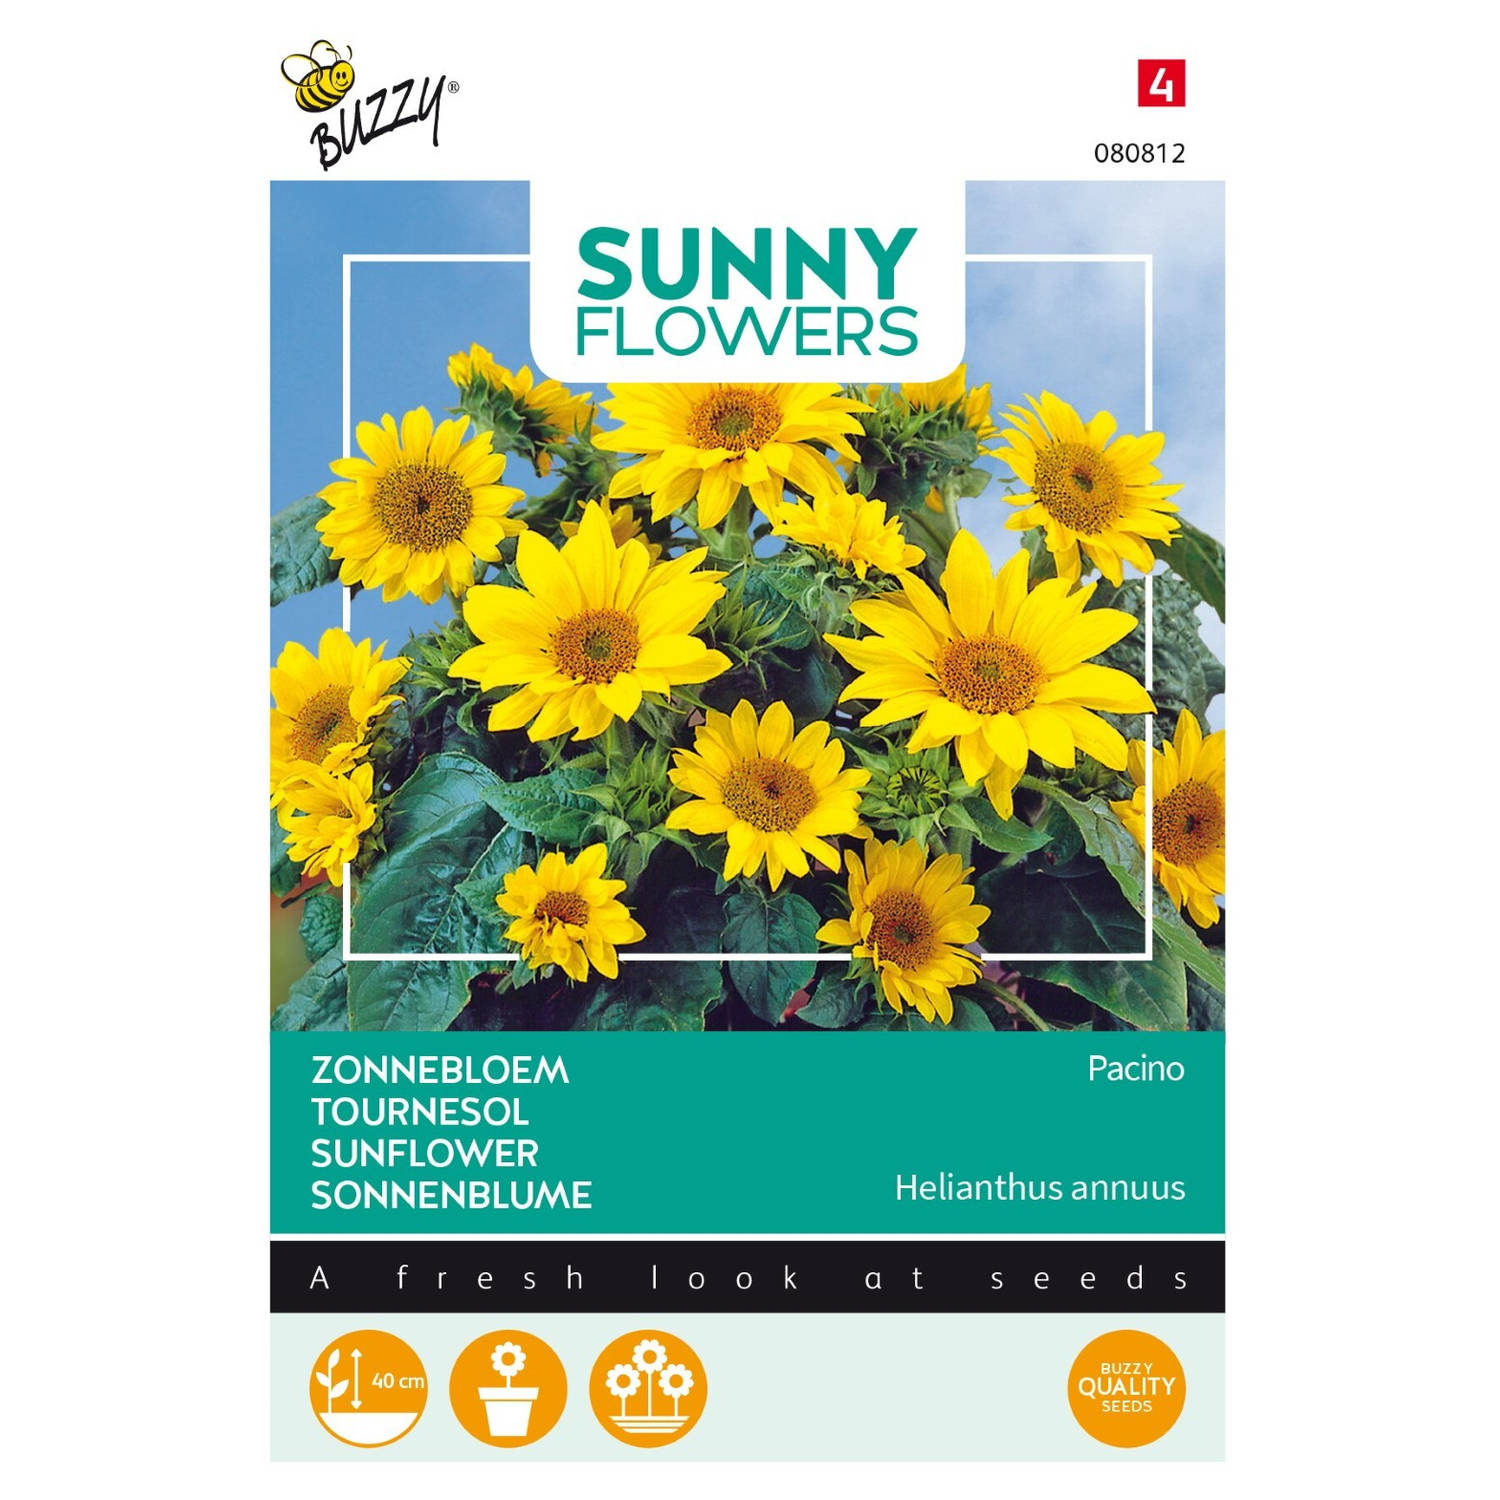 Buzzy - 3 stuks Sunny flowers pacino gold